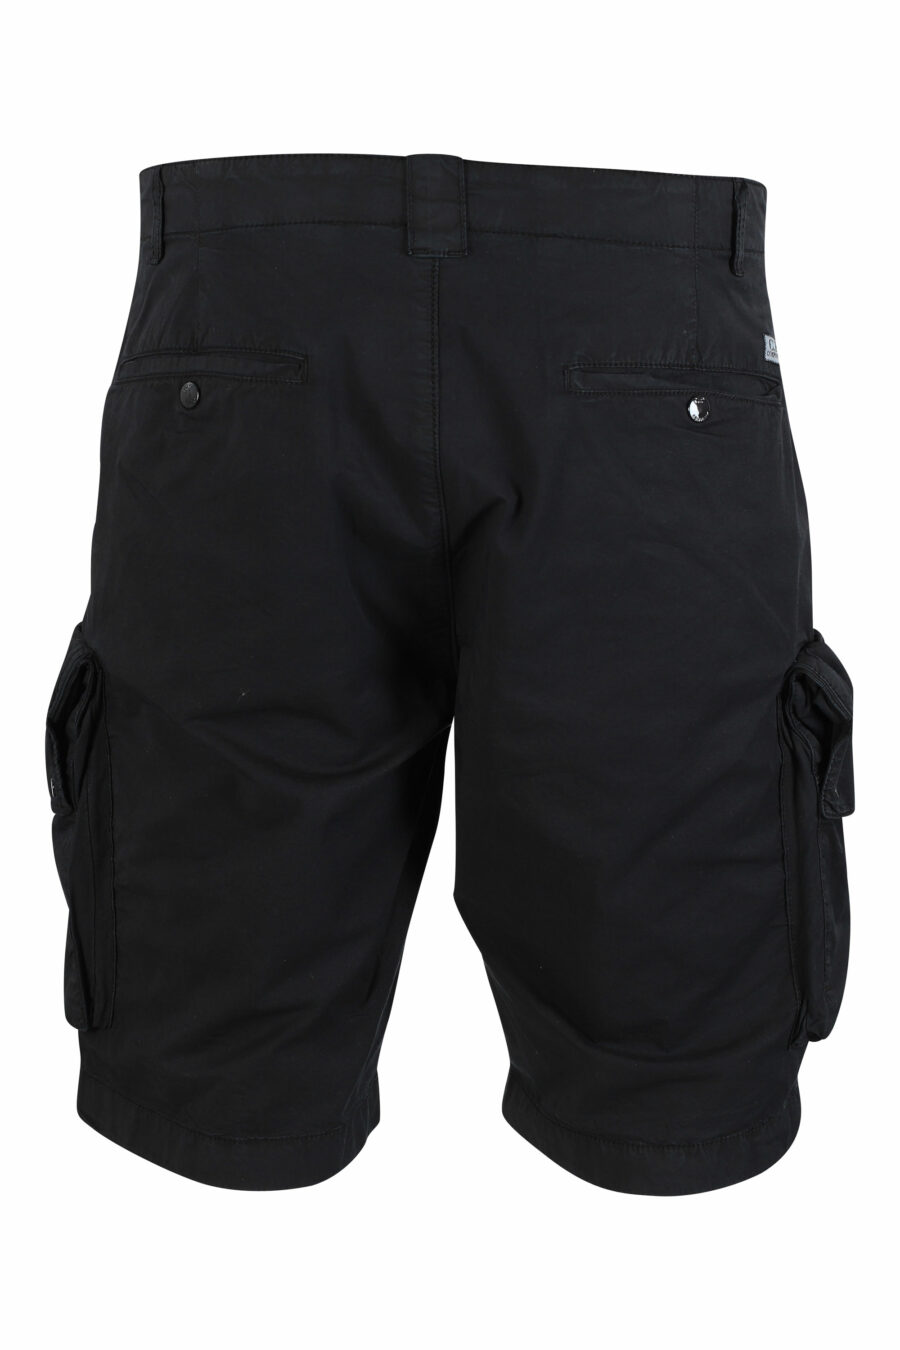 Black shorts with side pockets and circular mini logo - IMG 9487